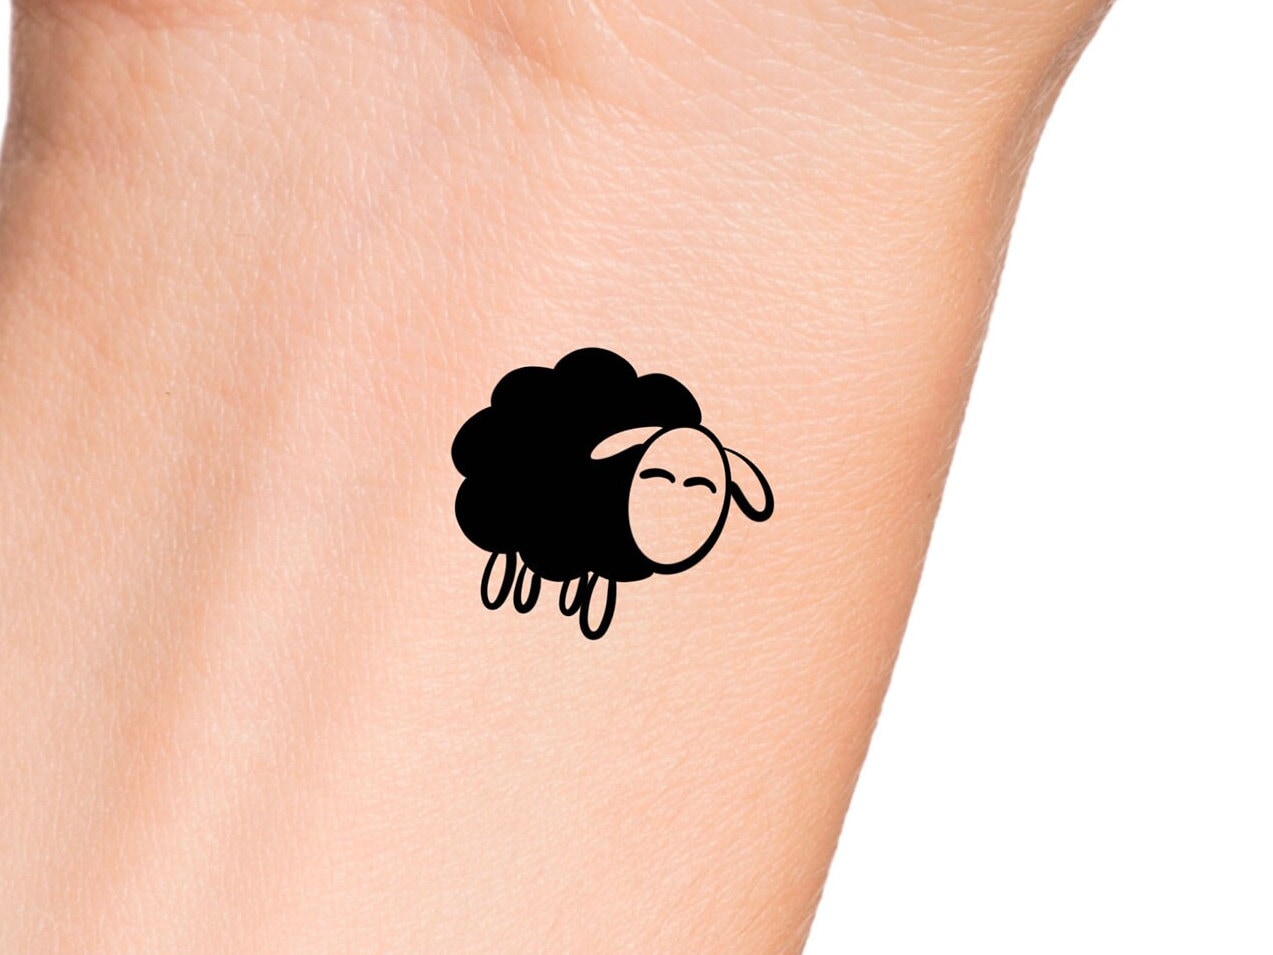 6436 Sheep Tattoo Images Stock Photos  Vectors  Shutterstock